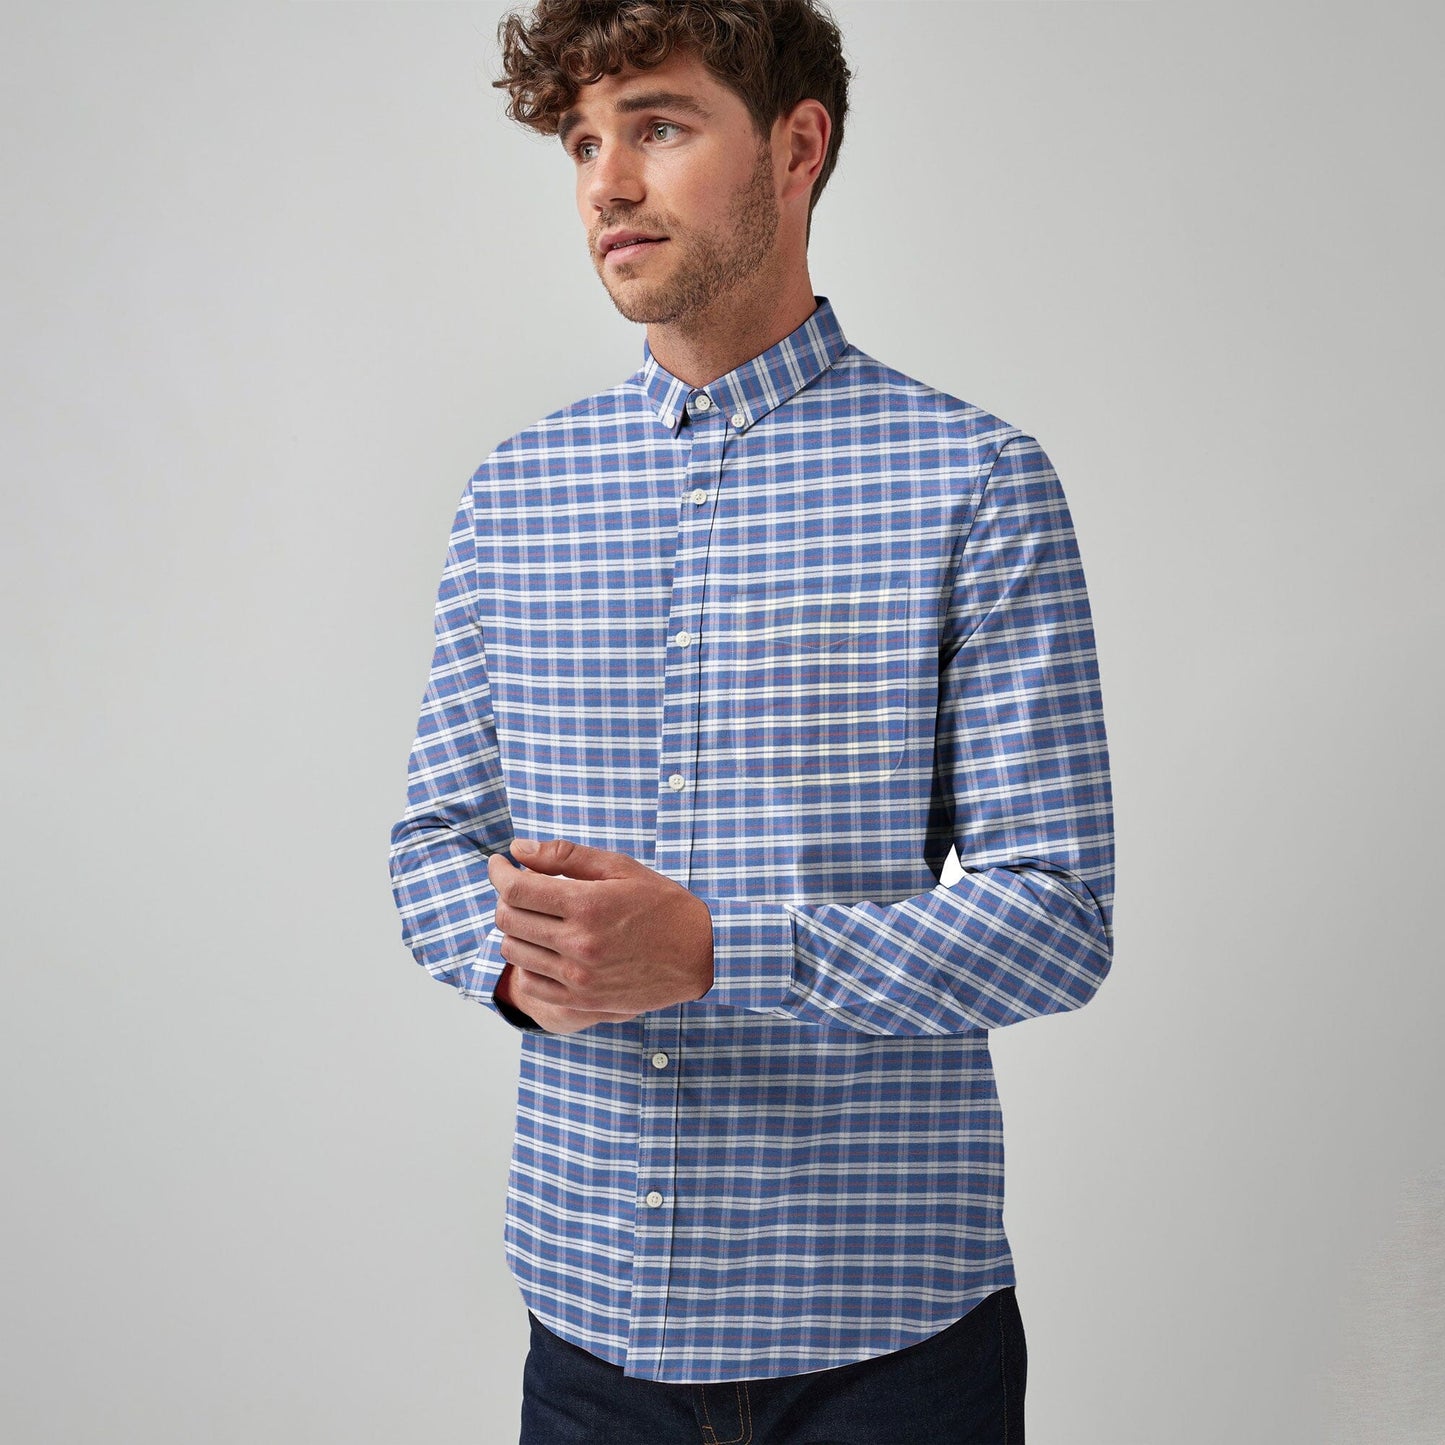 Cut Label Men's Check Style Formal Shirt Men's Casual Shirt First Choice Blue 16.5 32